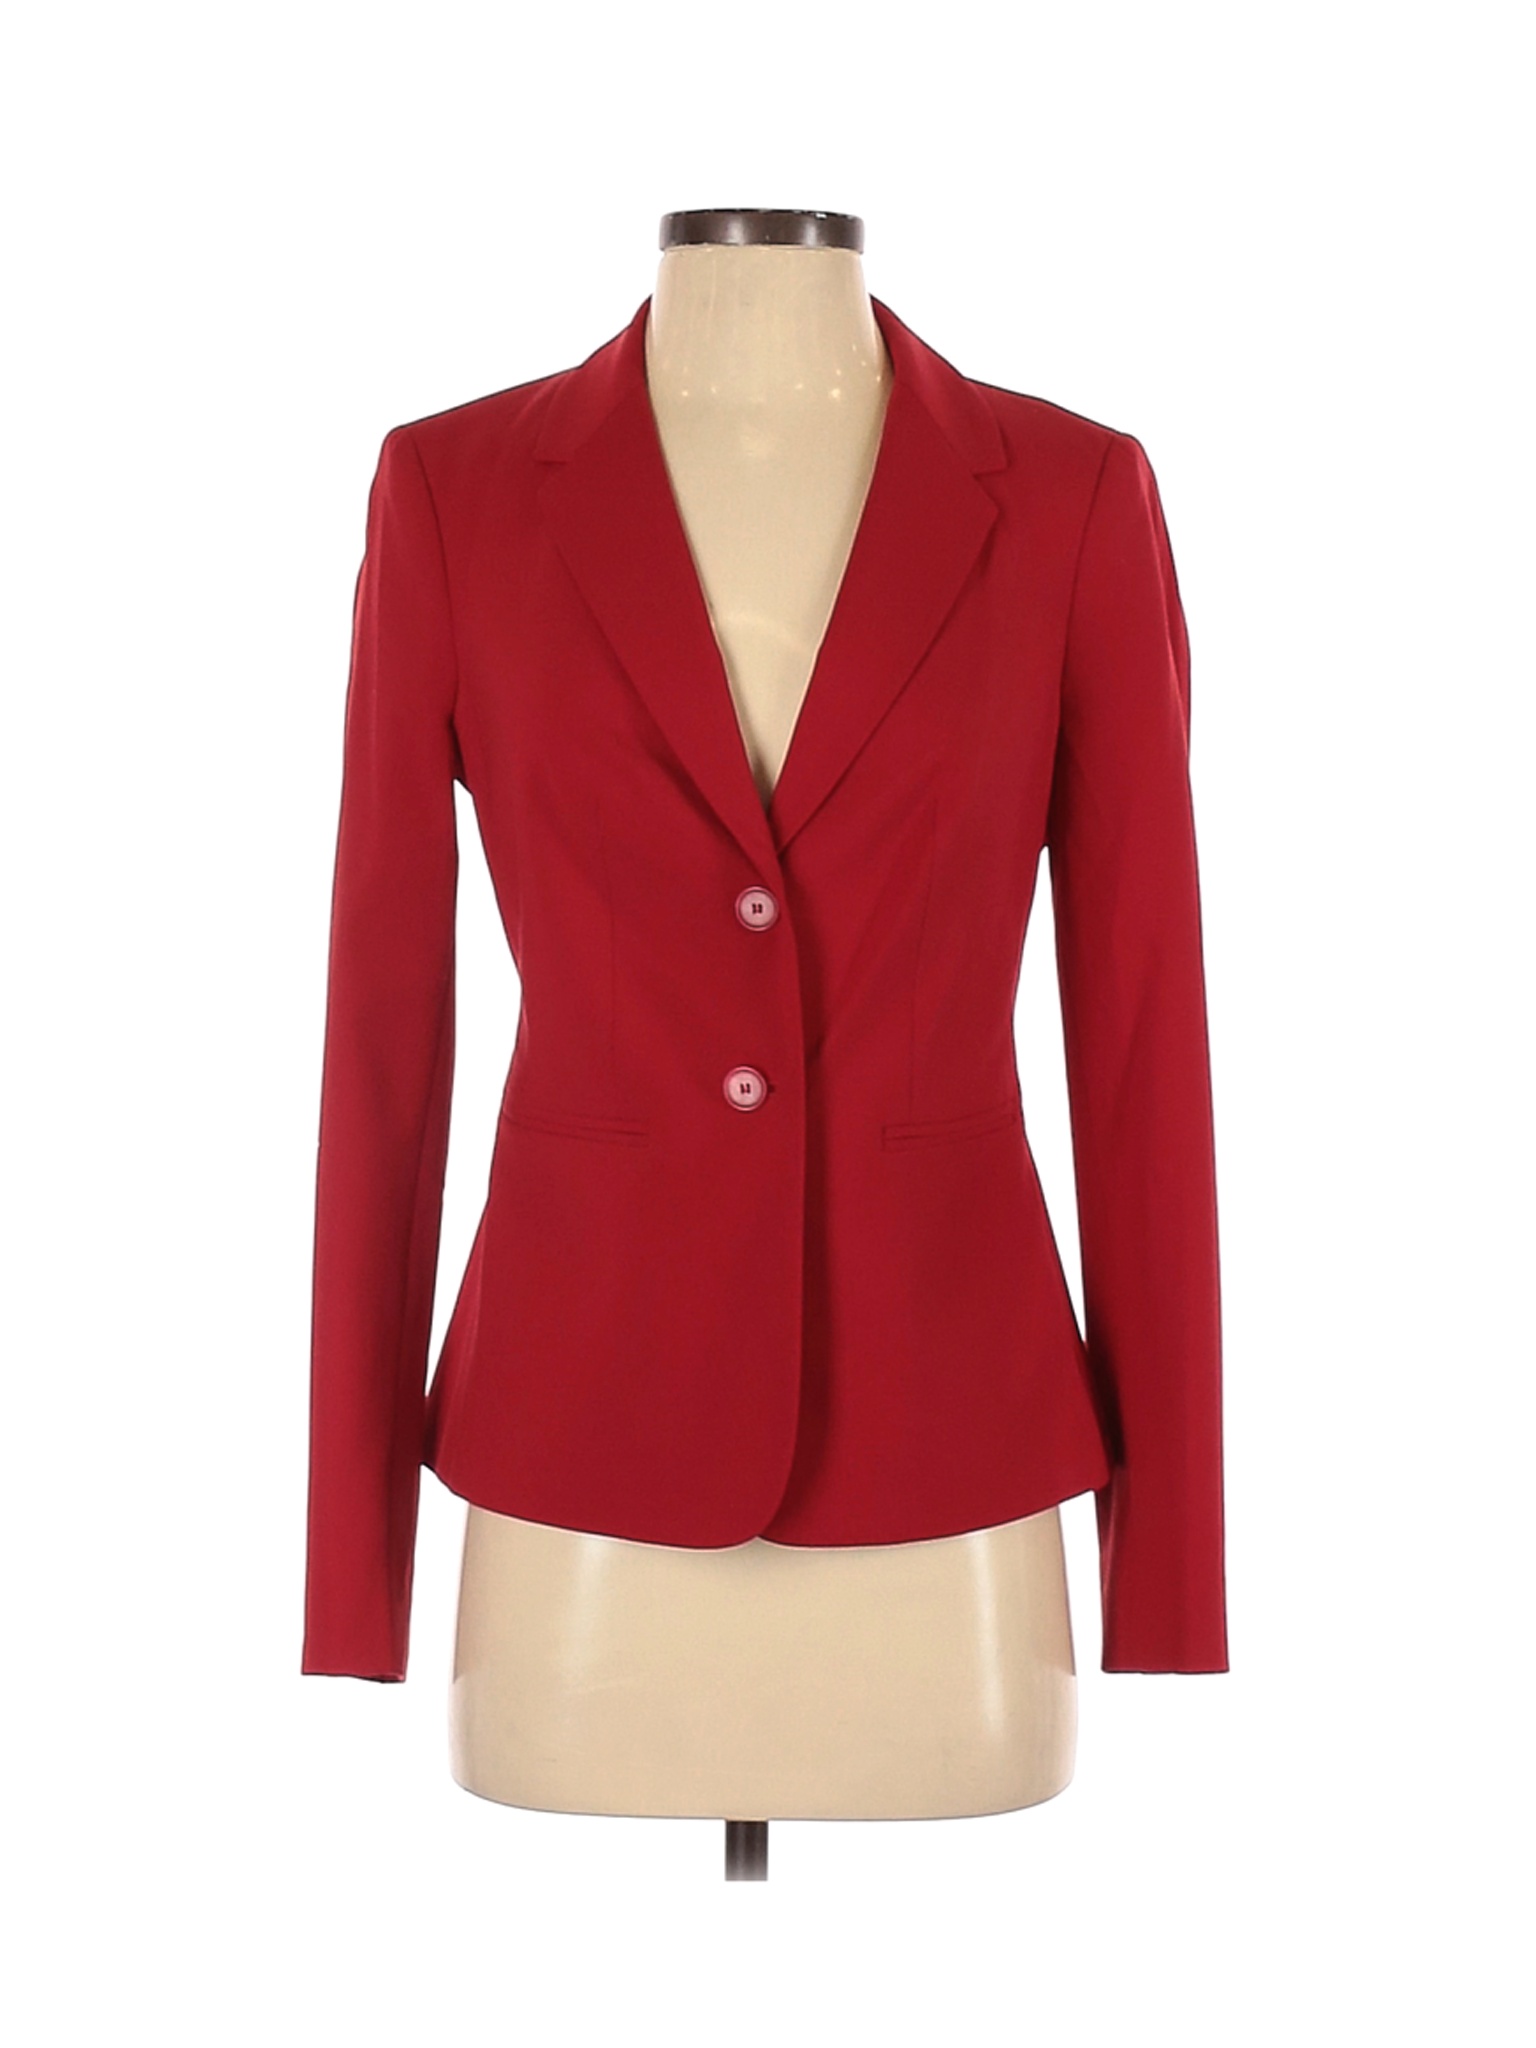 NWT The Limited Women Red Blazer 0 | eBay